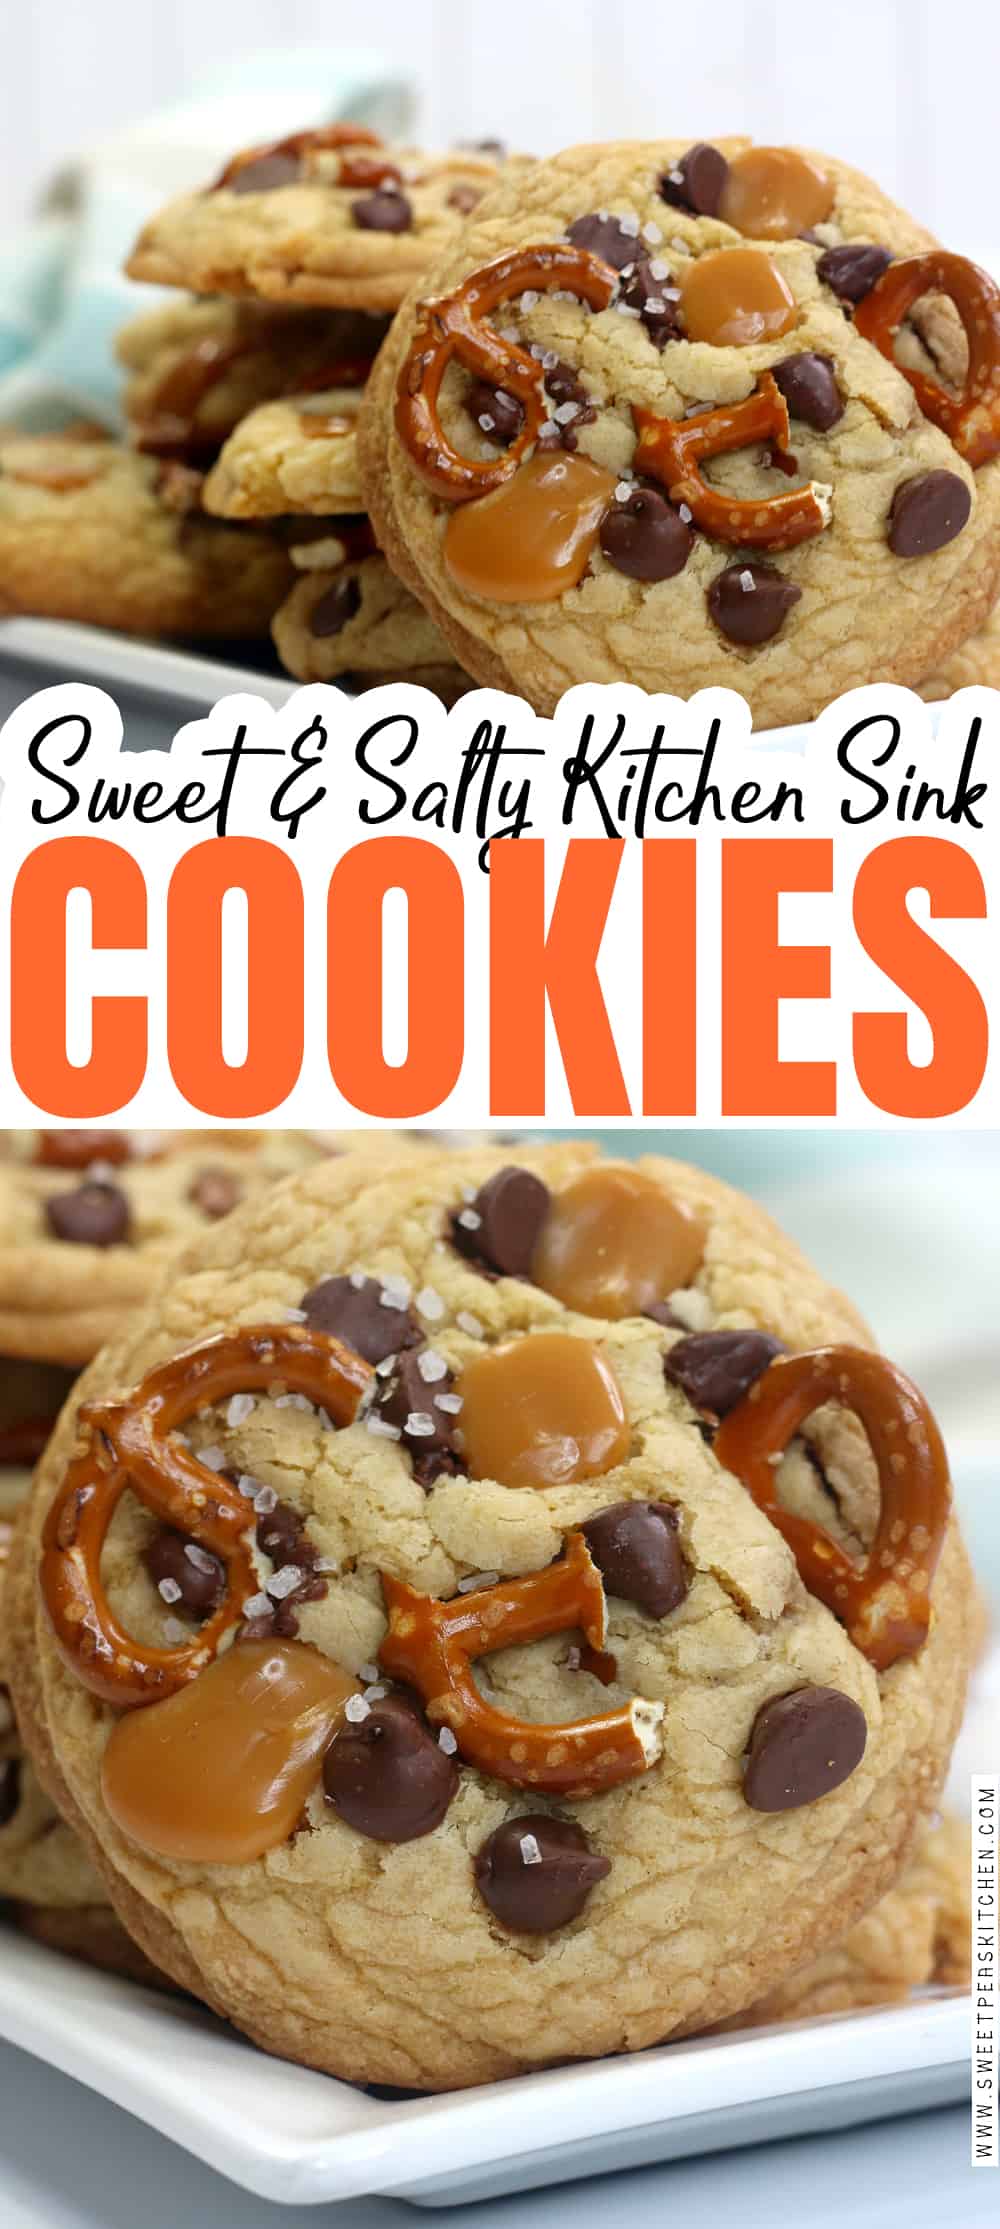 Sweet & Salty Kitchen Sink Cookies